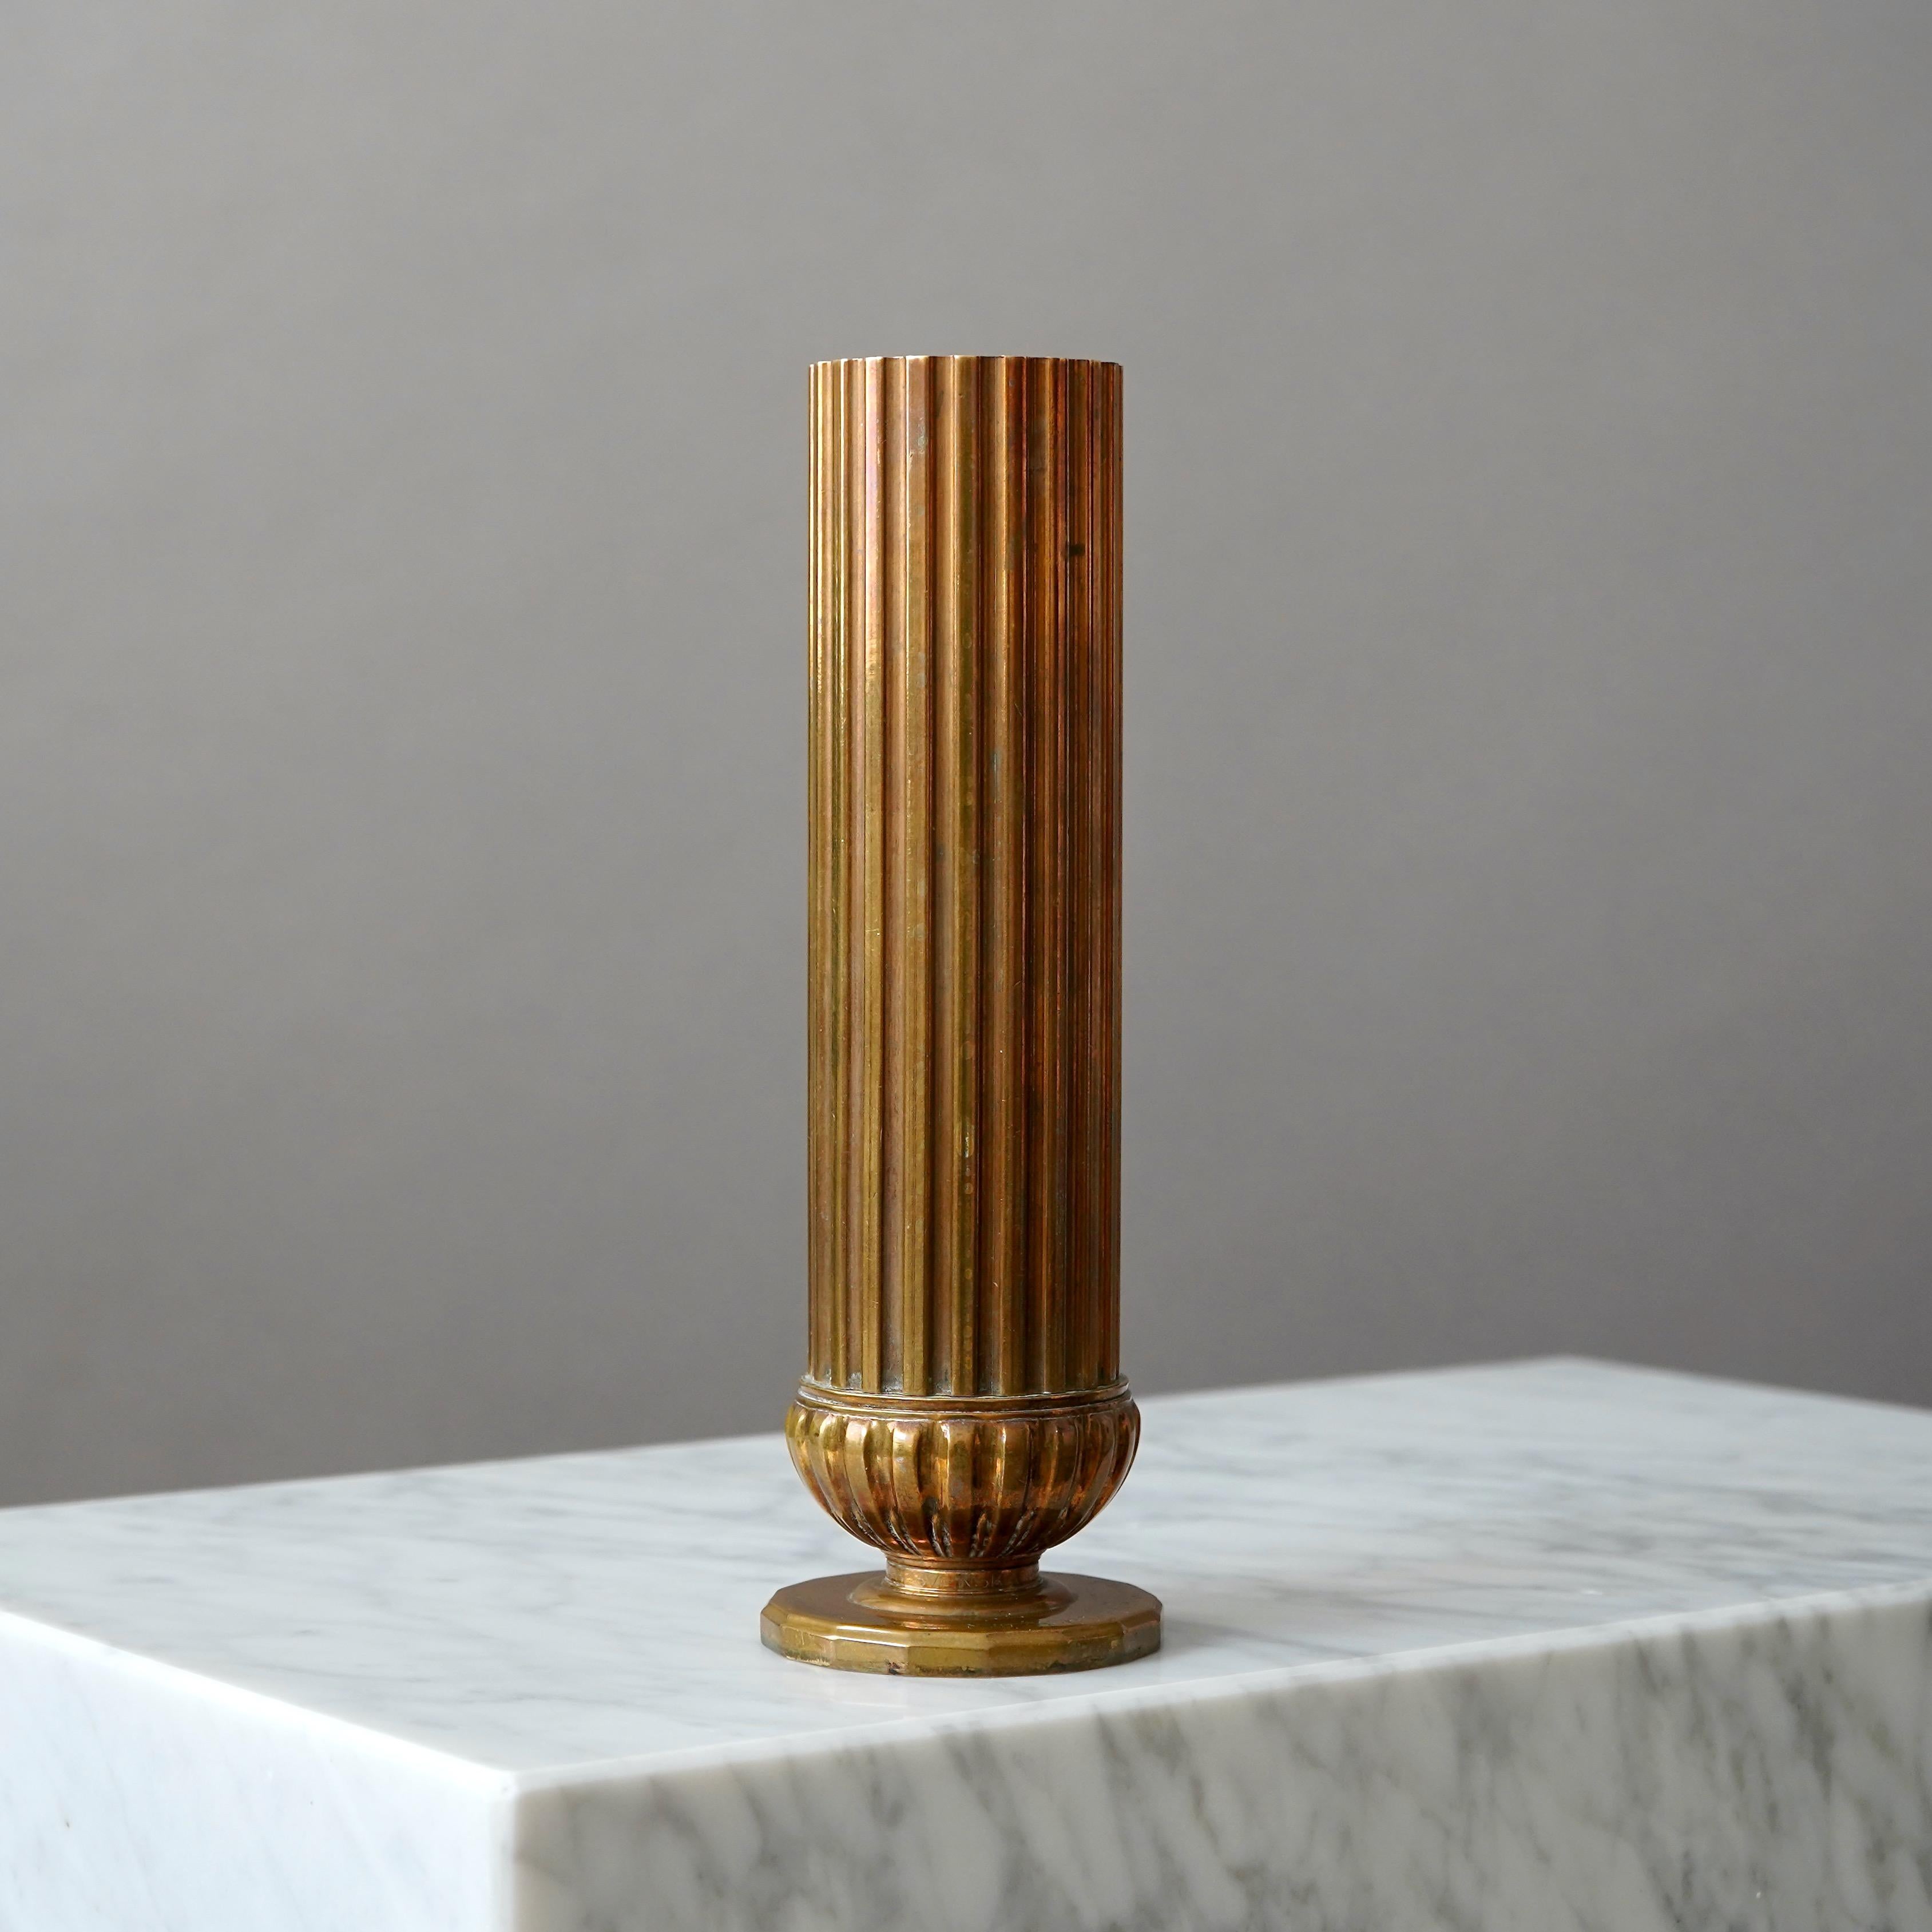 Mid-20th Century Bronze Art Deco Vase by SVM Handarbete, Sweden, 1930s For Sale